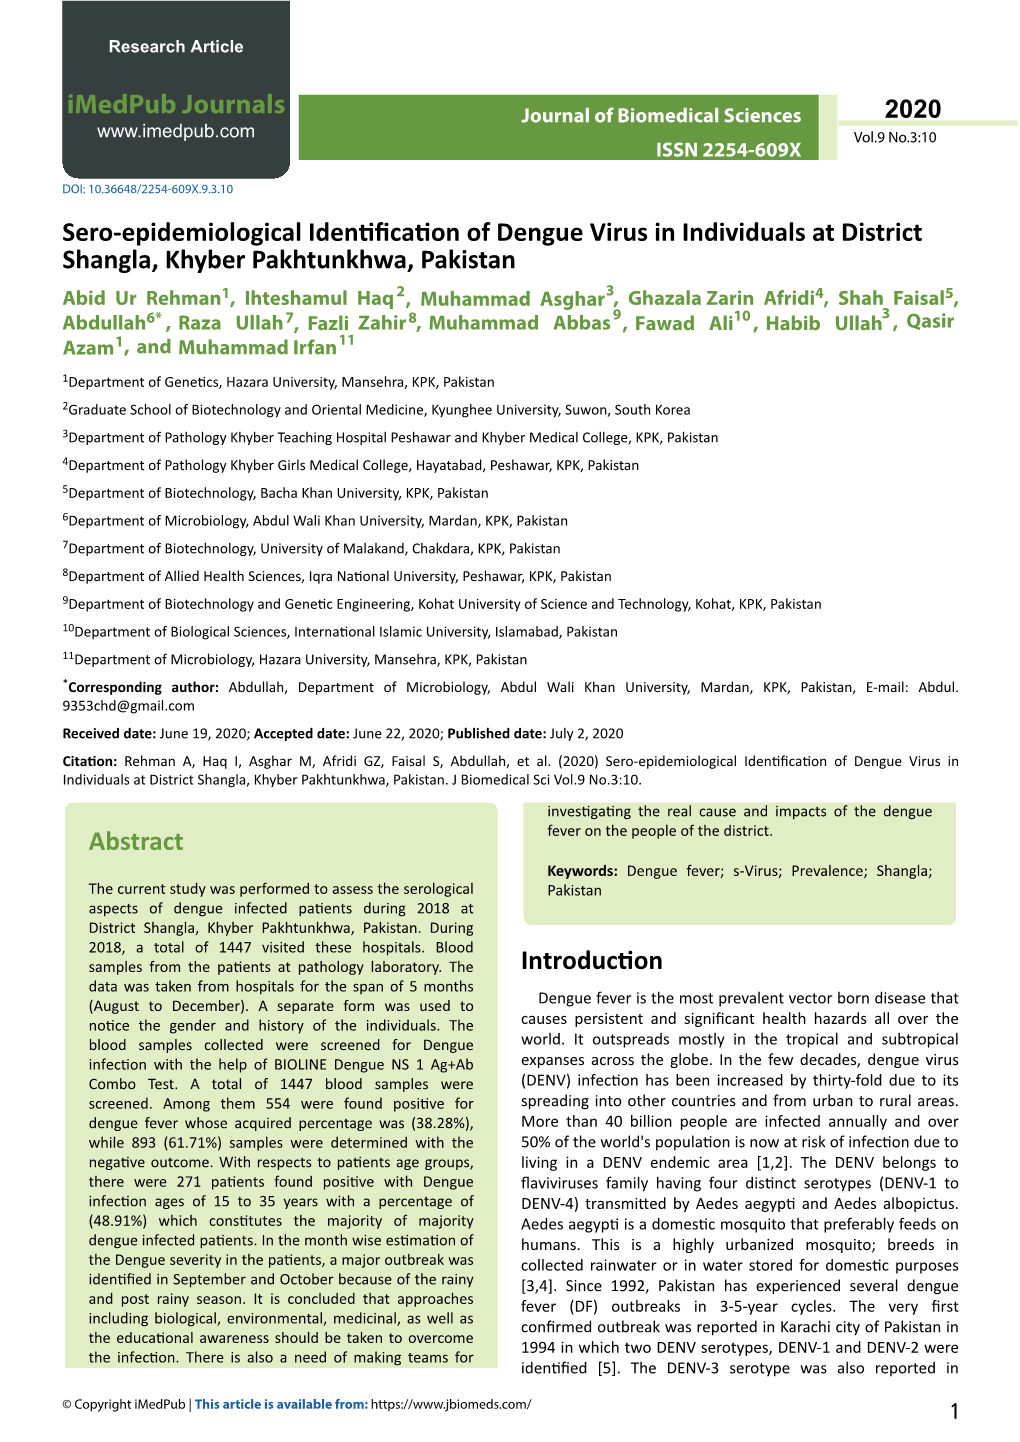 Sero-Epidemiological Identification of Dengue Virus in Individuals At